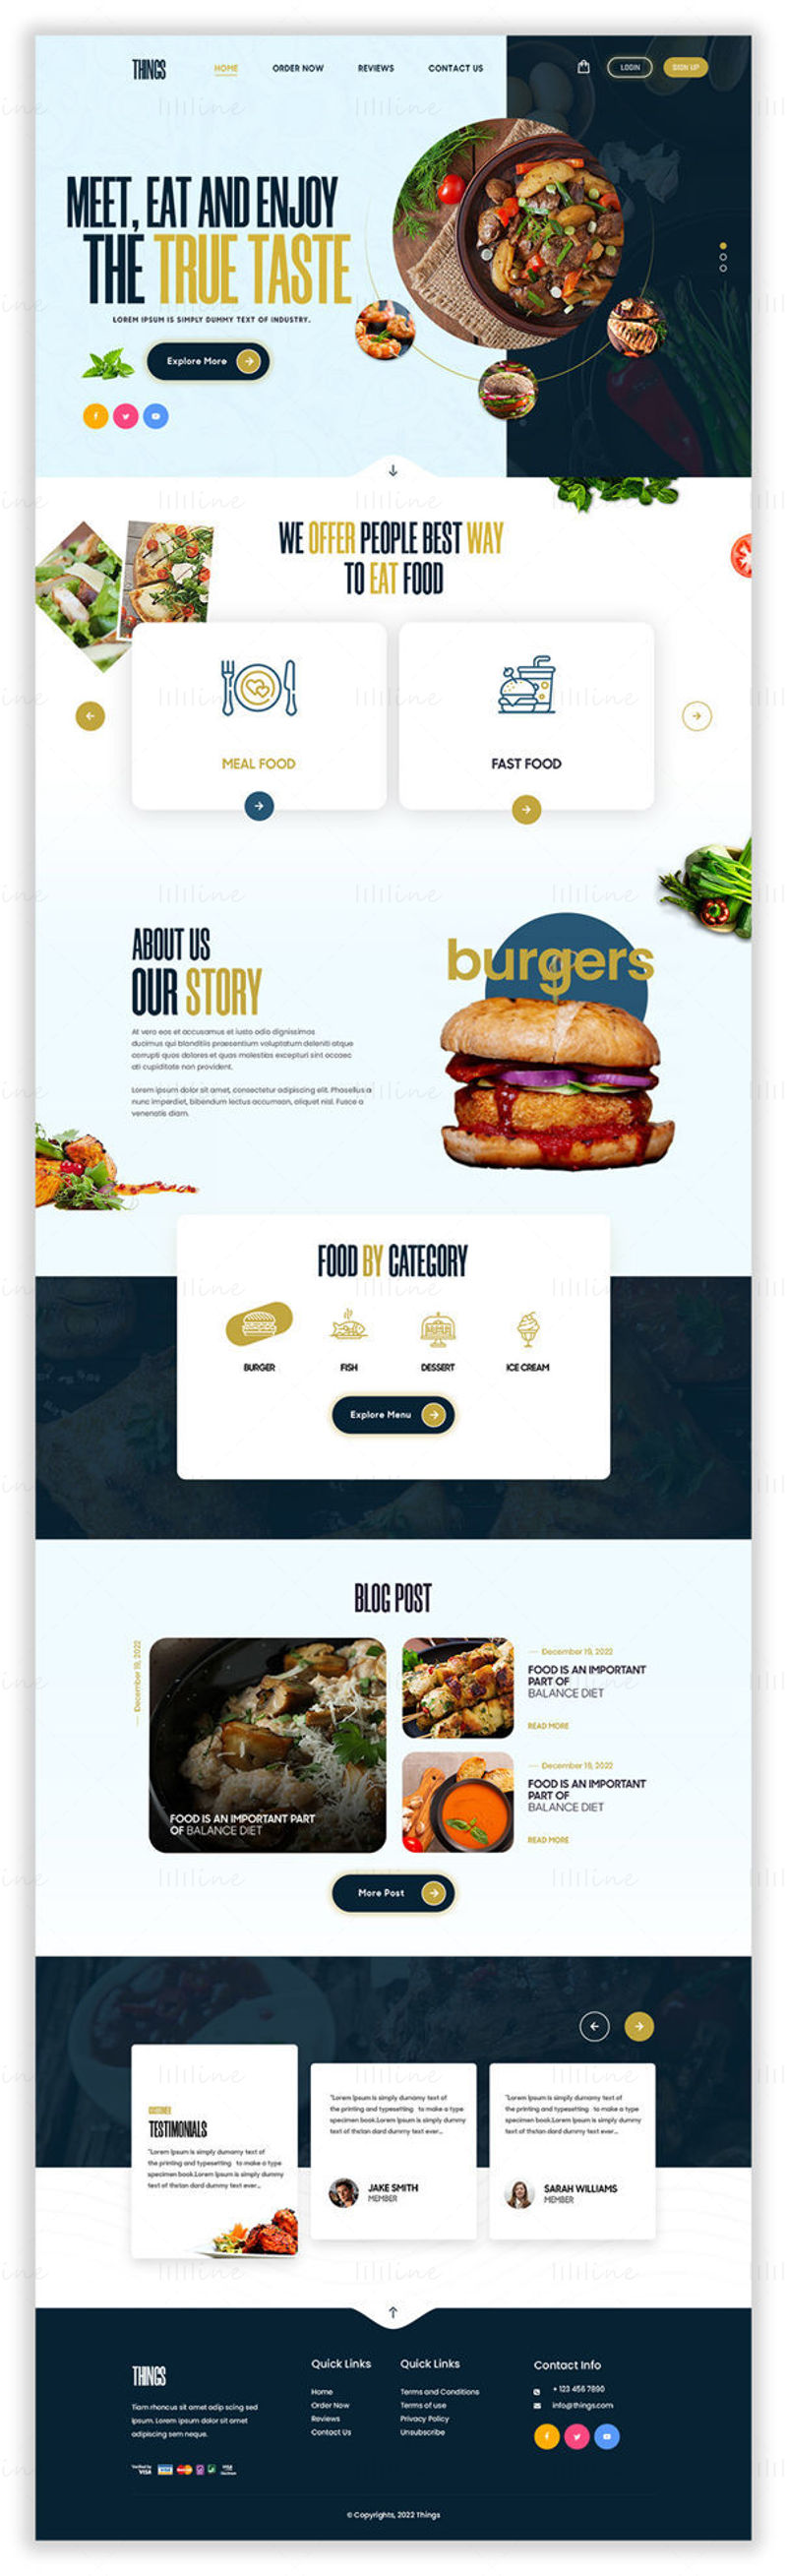 Things Food sablon – UI Adobe Photoshop